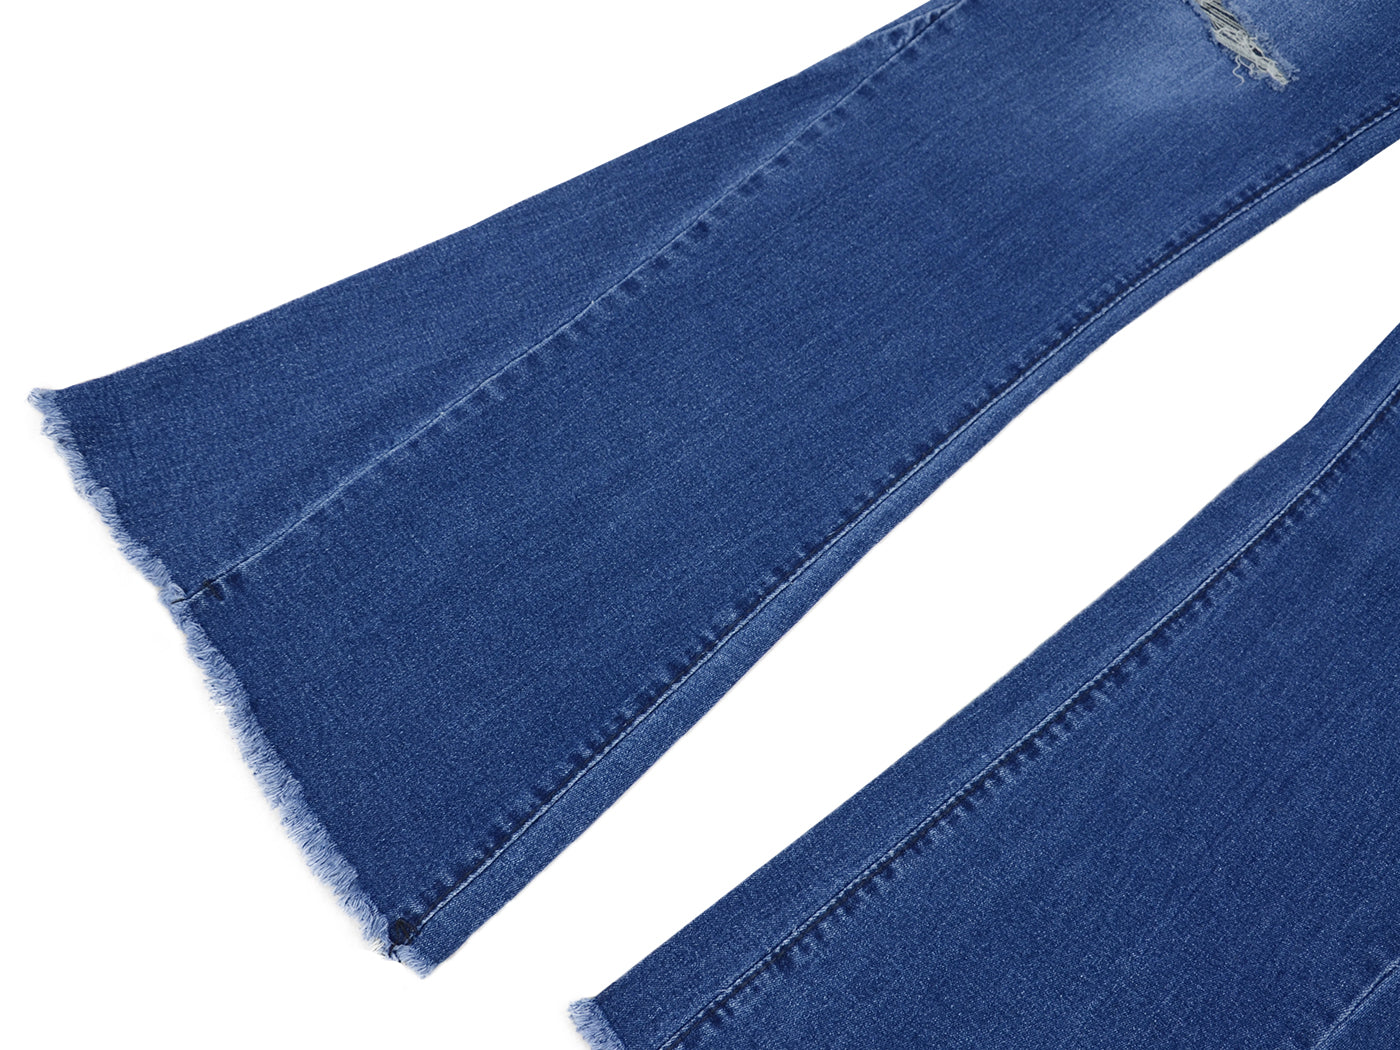 Elastic Waist Distressed Flared Long Bell Bottom Denim Jeans